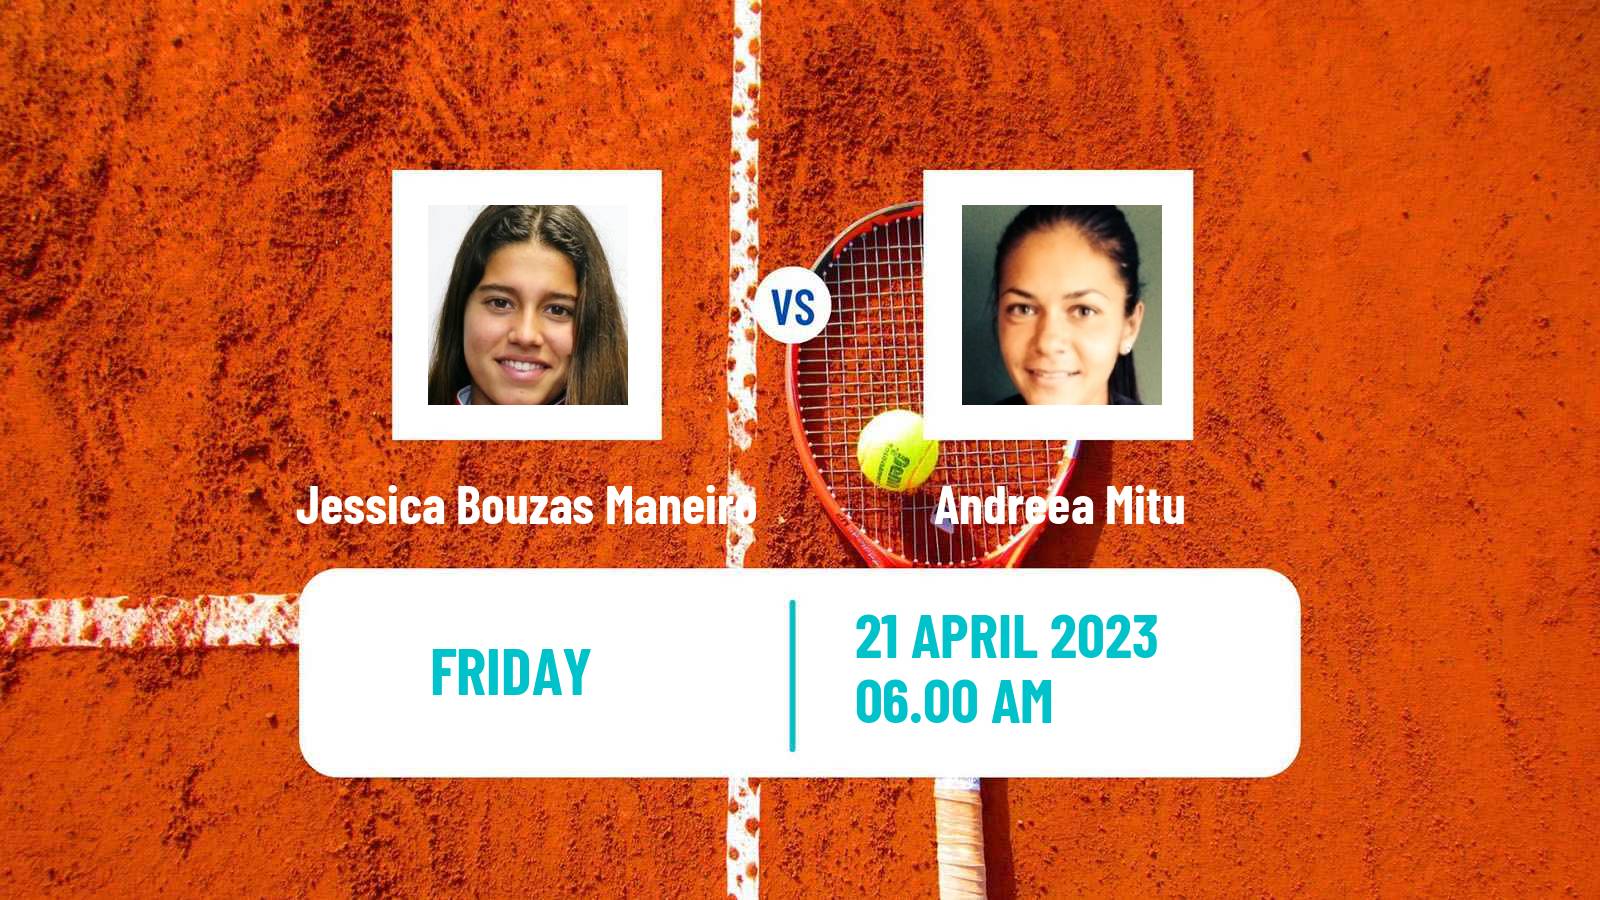 Tennis ITF Tournaments Jessica Bouzas Maneiro - Andreea Mitu